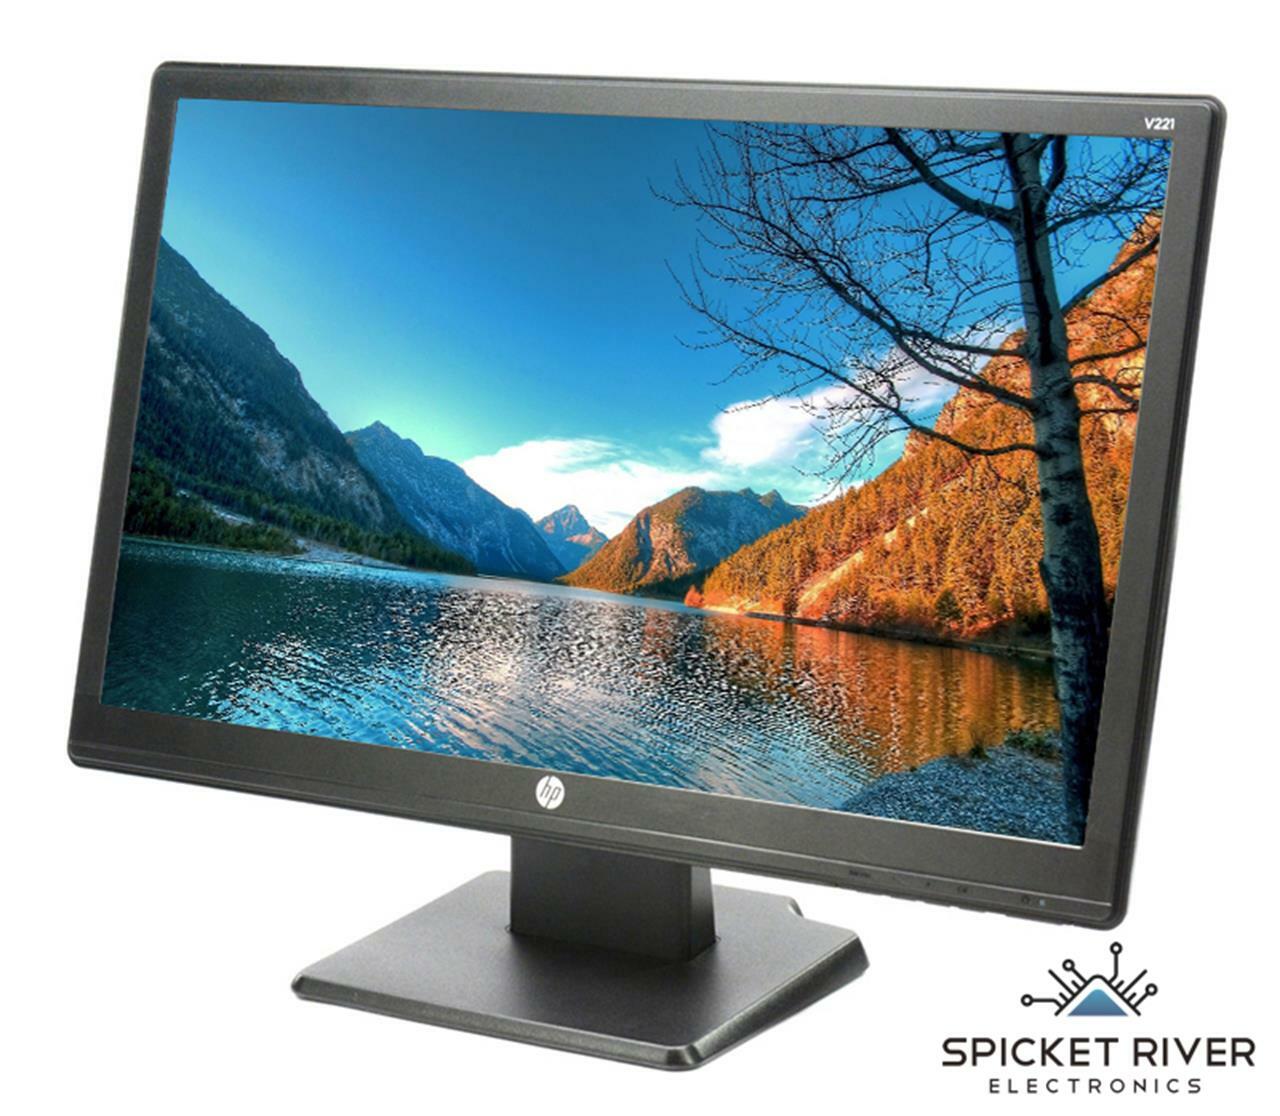 NEW - HP V221 21.5" 16:9 60Hz 1920x1200 LED-Backlit Display Monitor